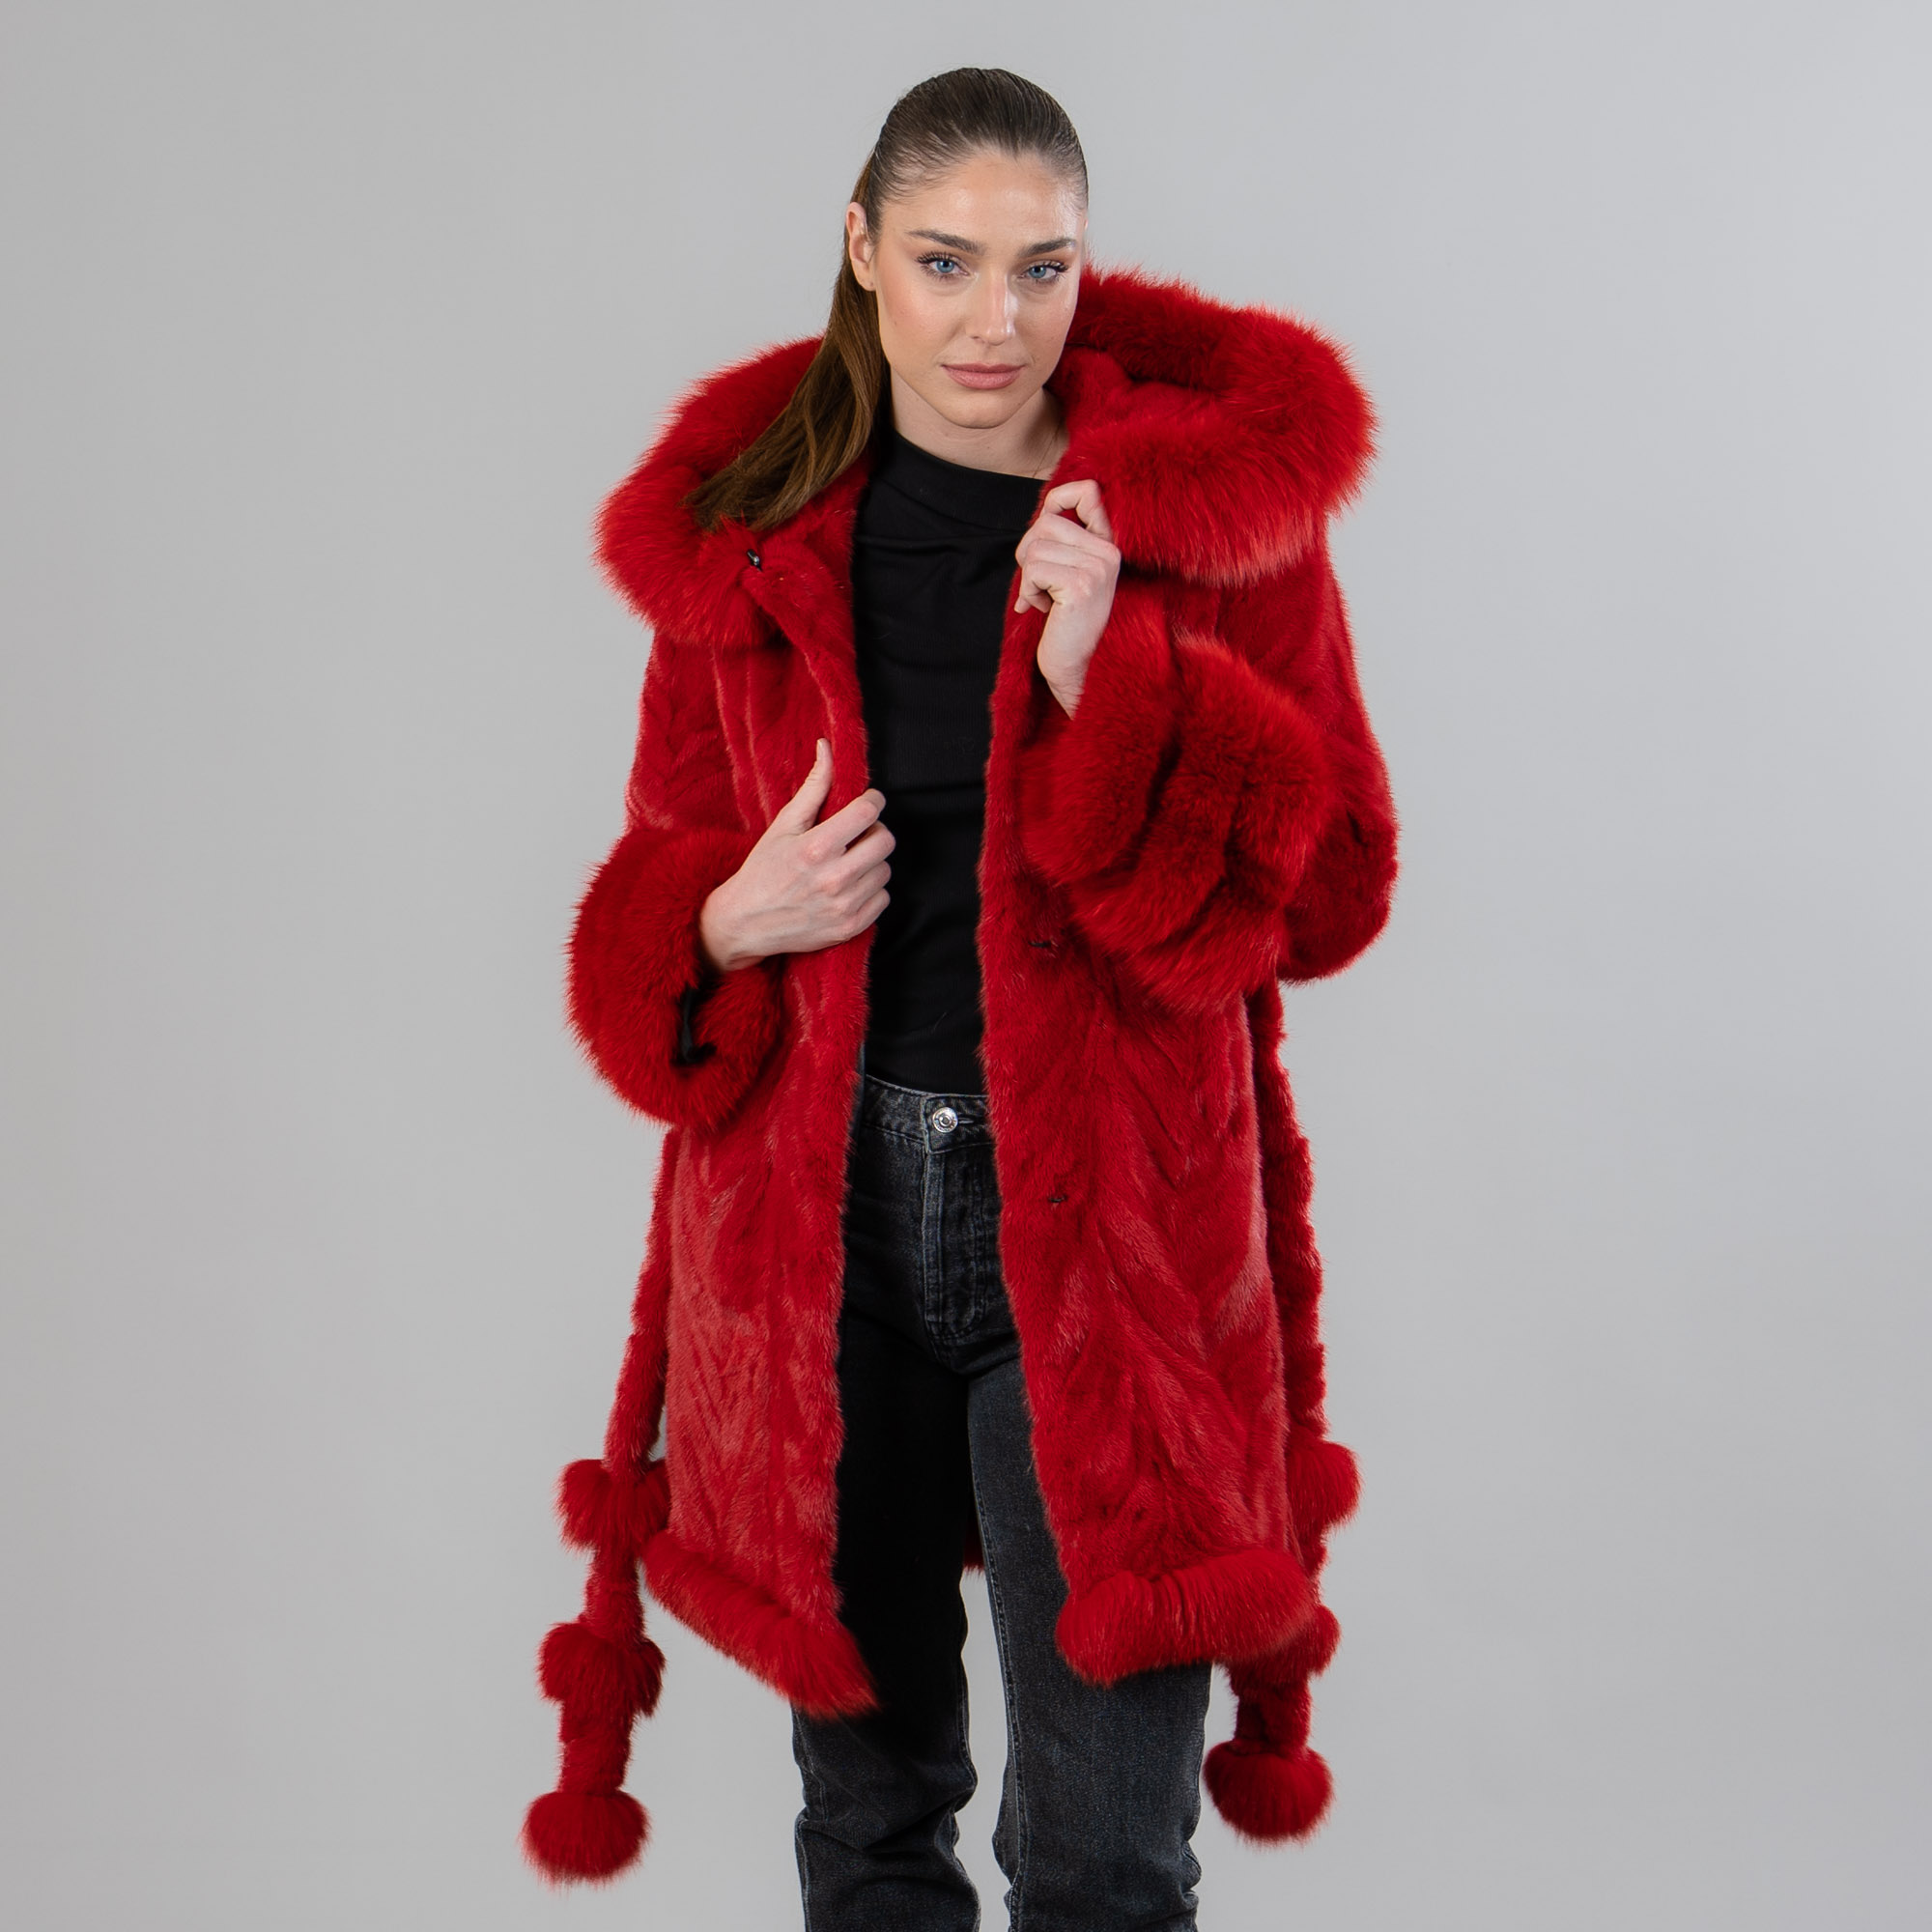 Red mink fur coat with fox fur details